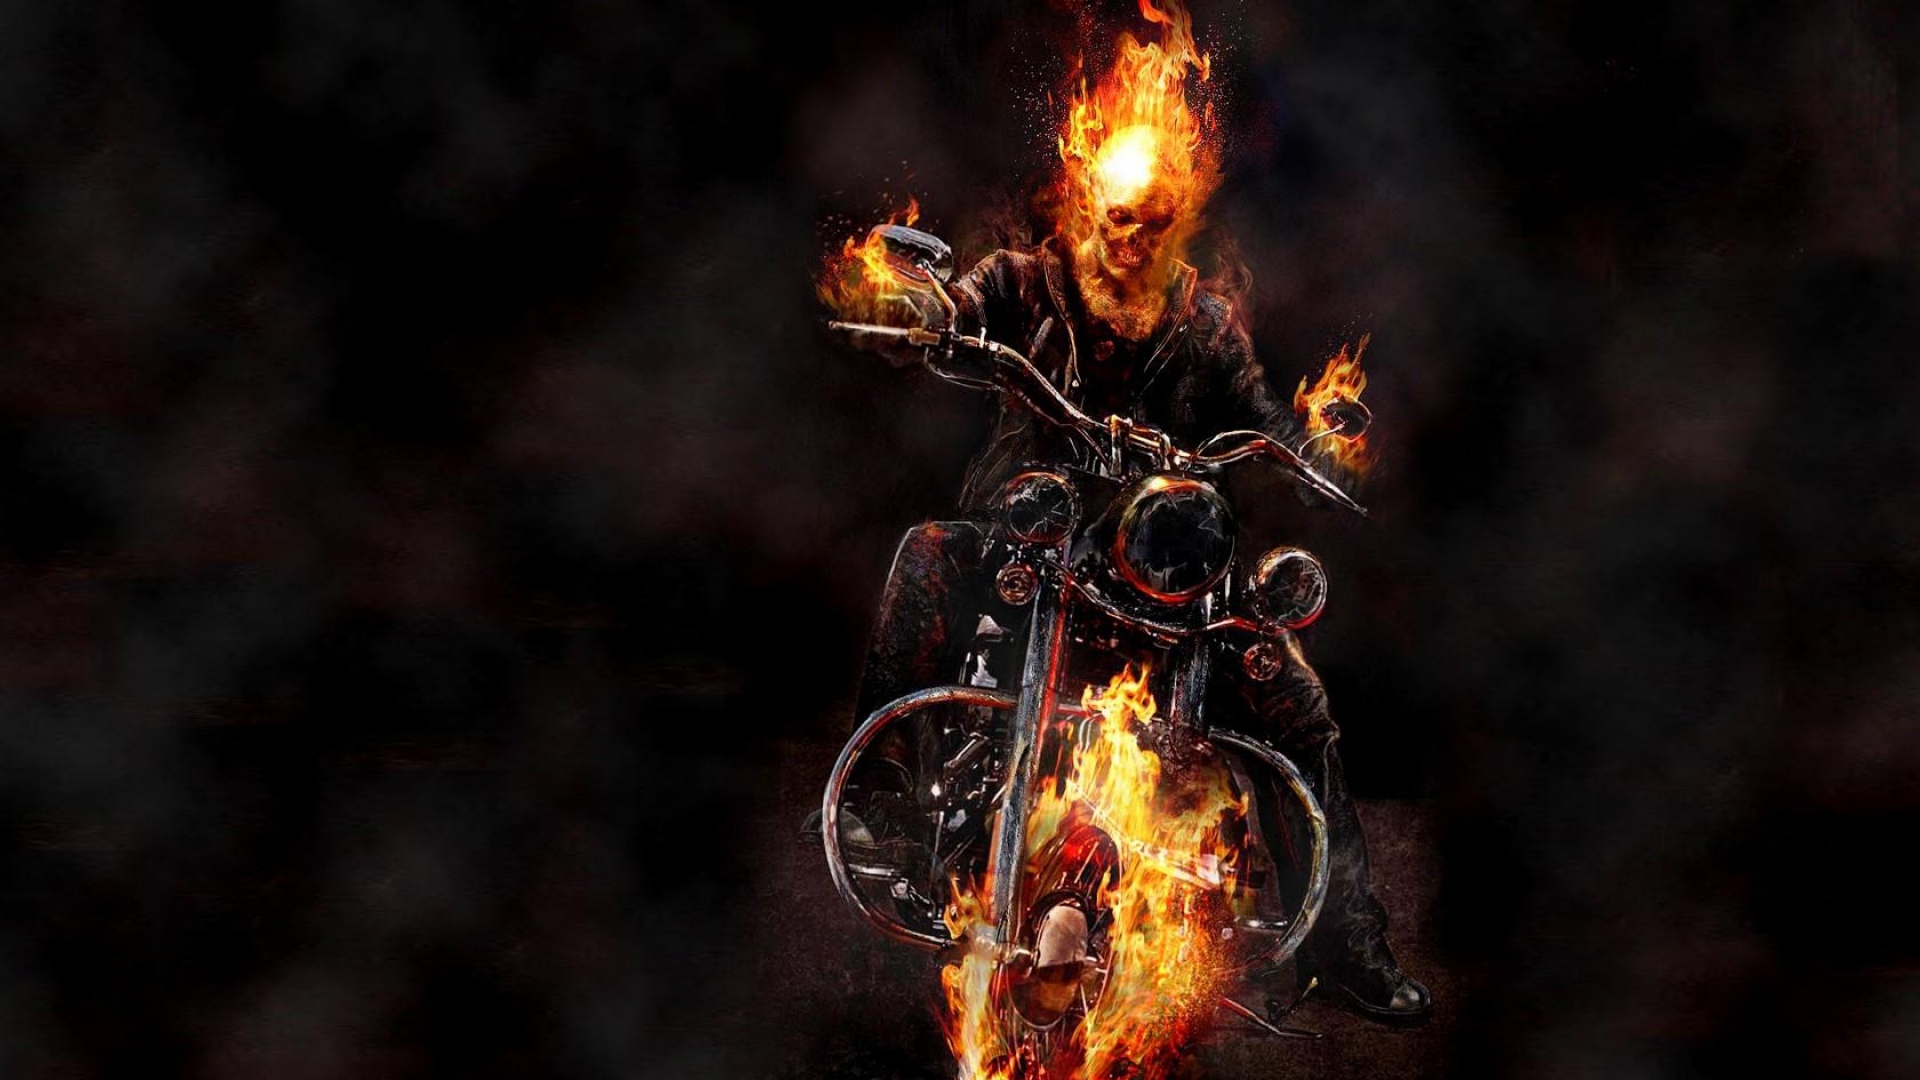 Motorcycle Ghost Rider Image HD Wallpaper WallpaperLepi